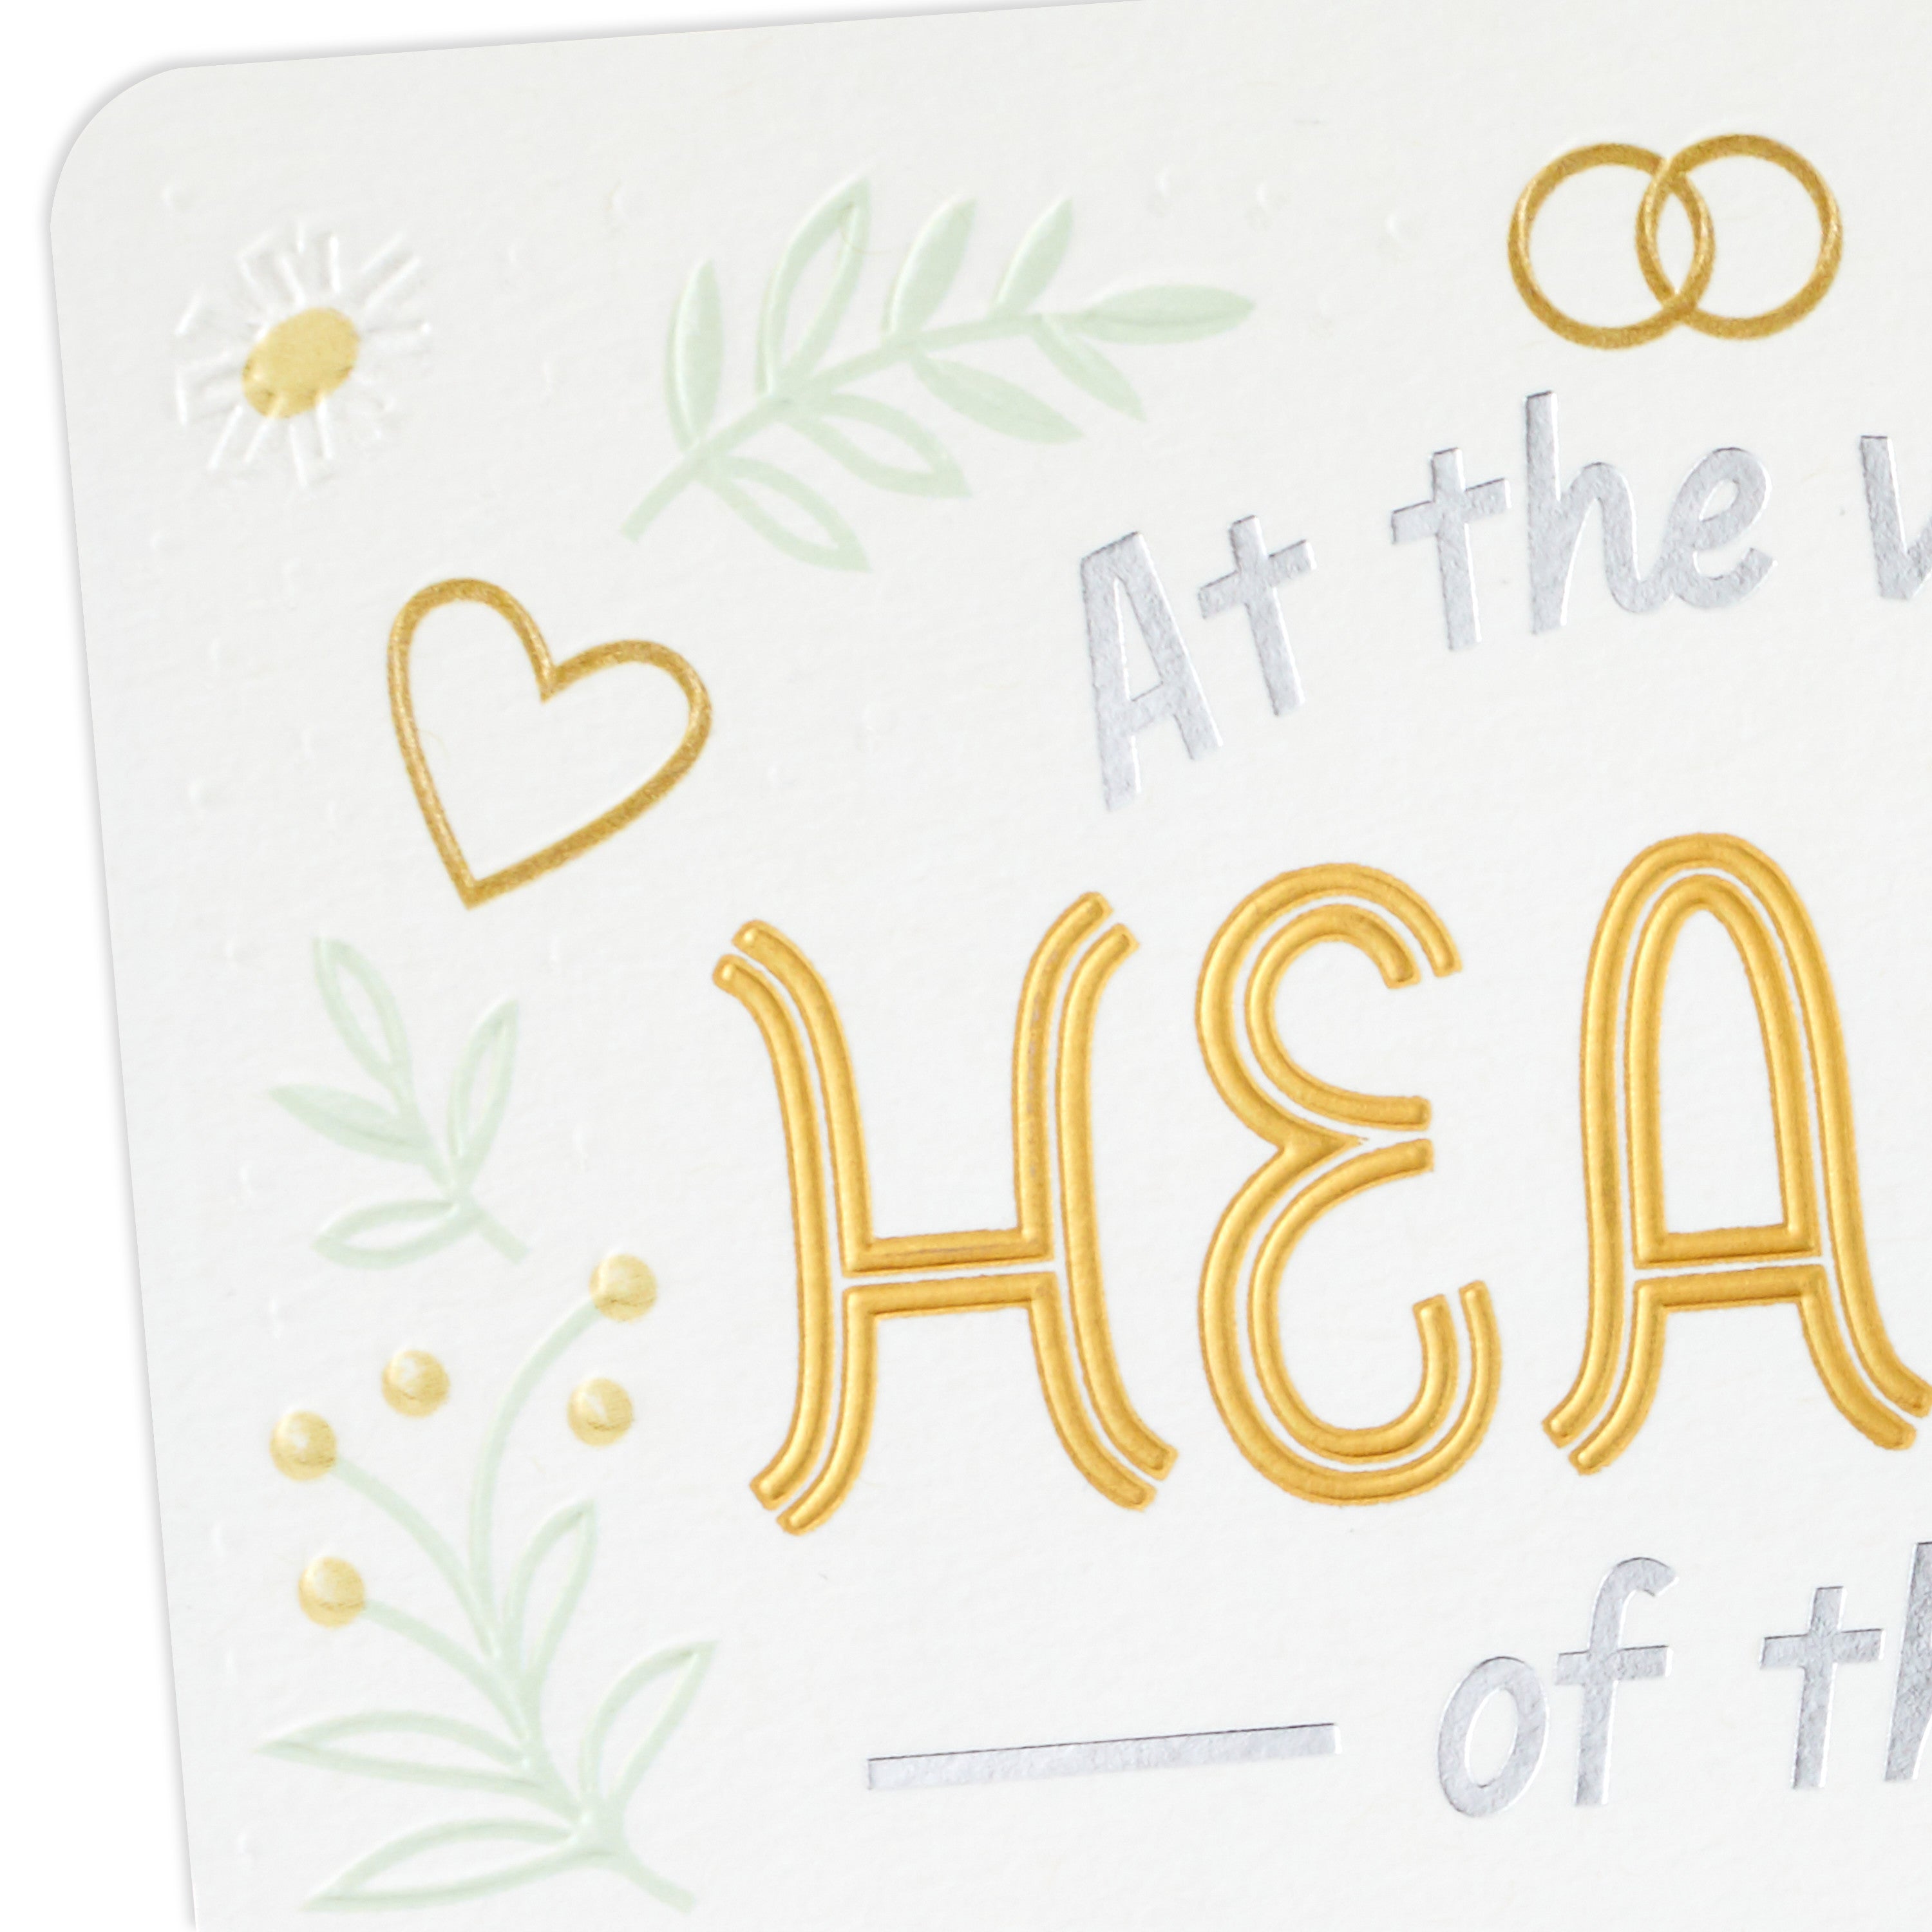 Hallmark Wedding Card (May There Always Be Love)